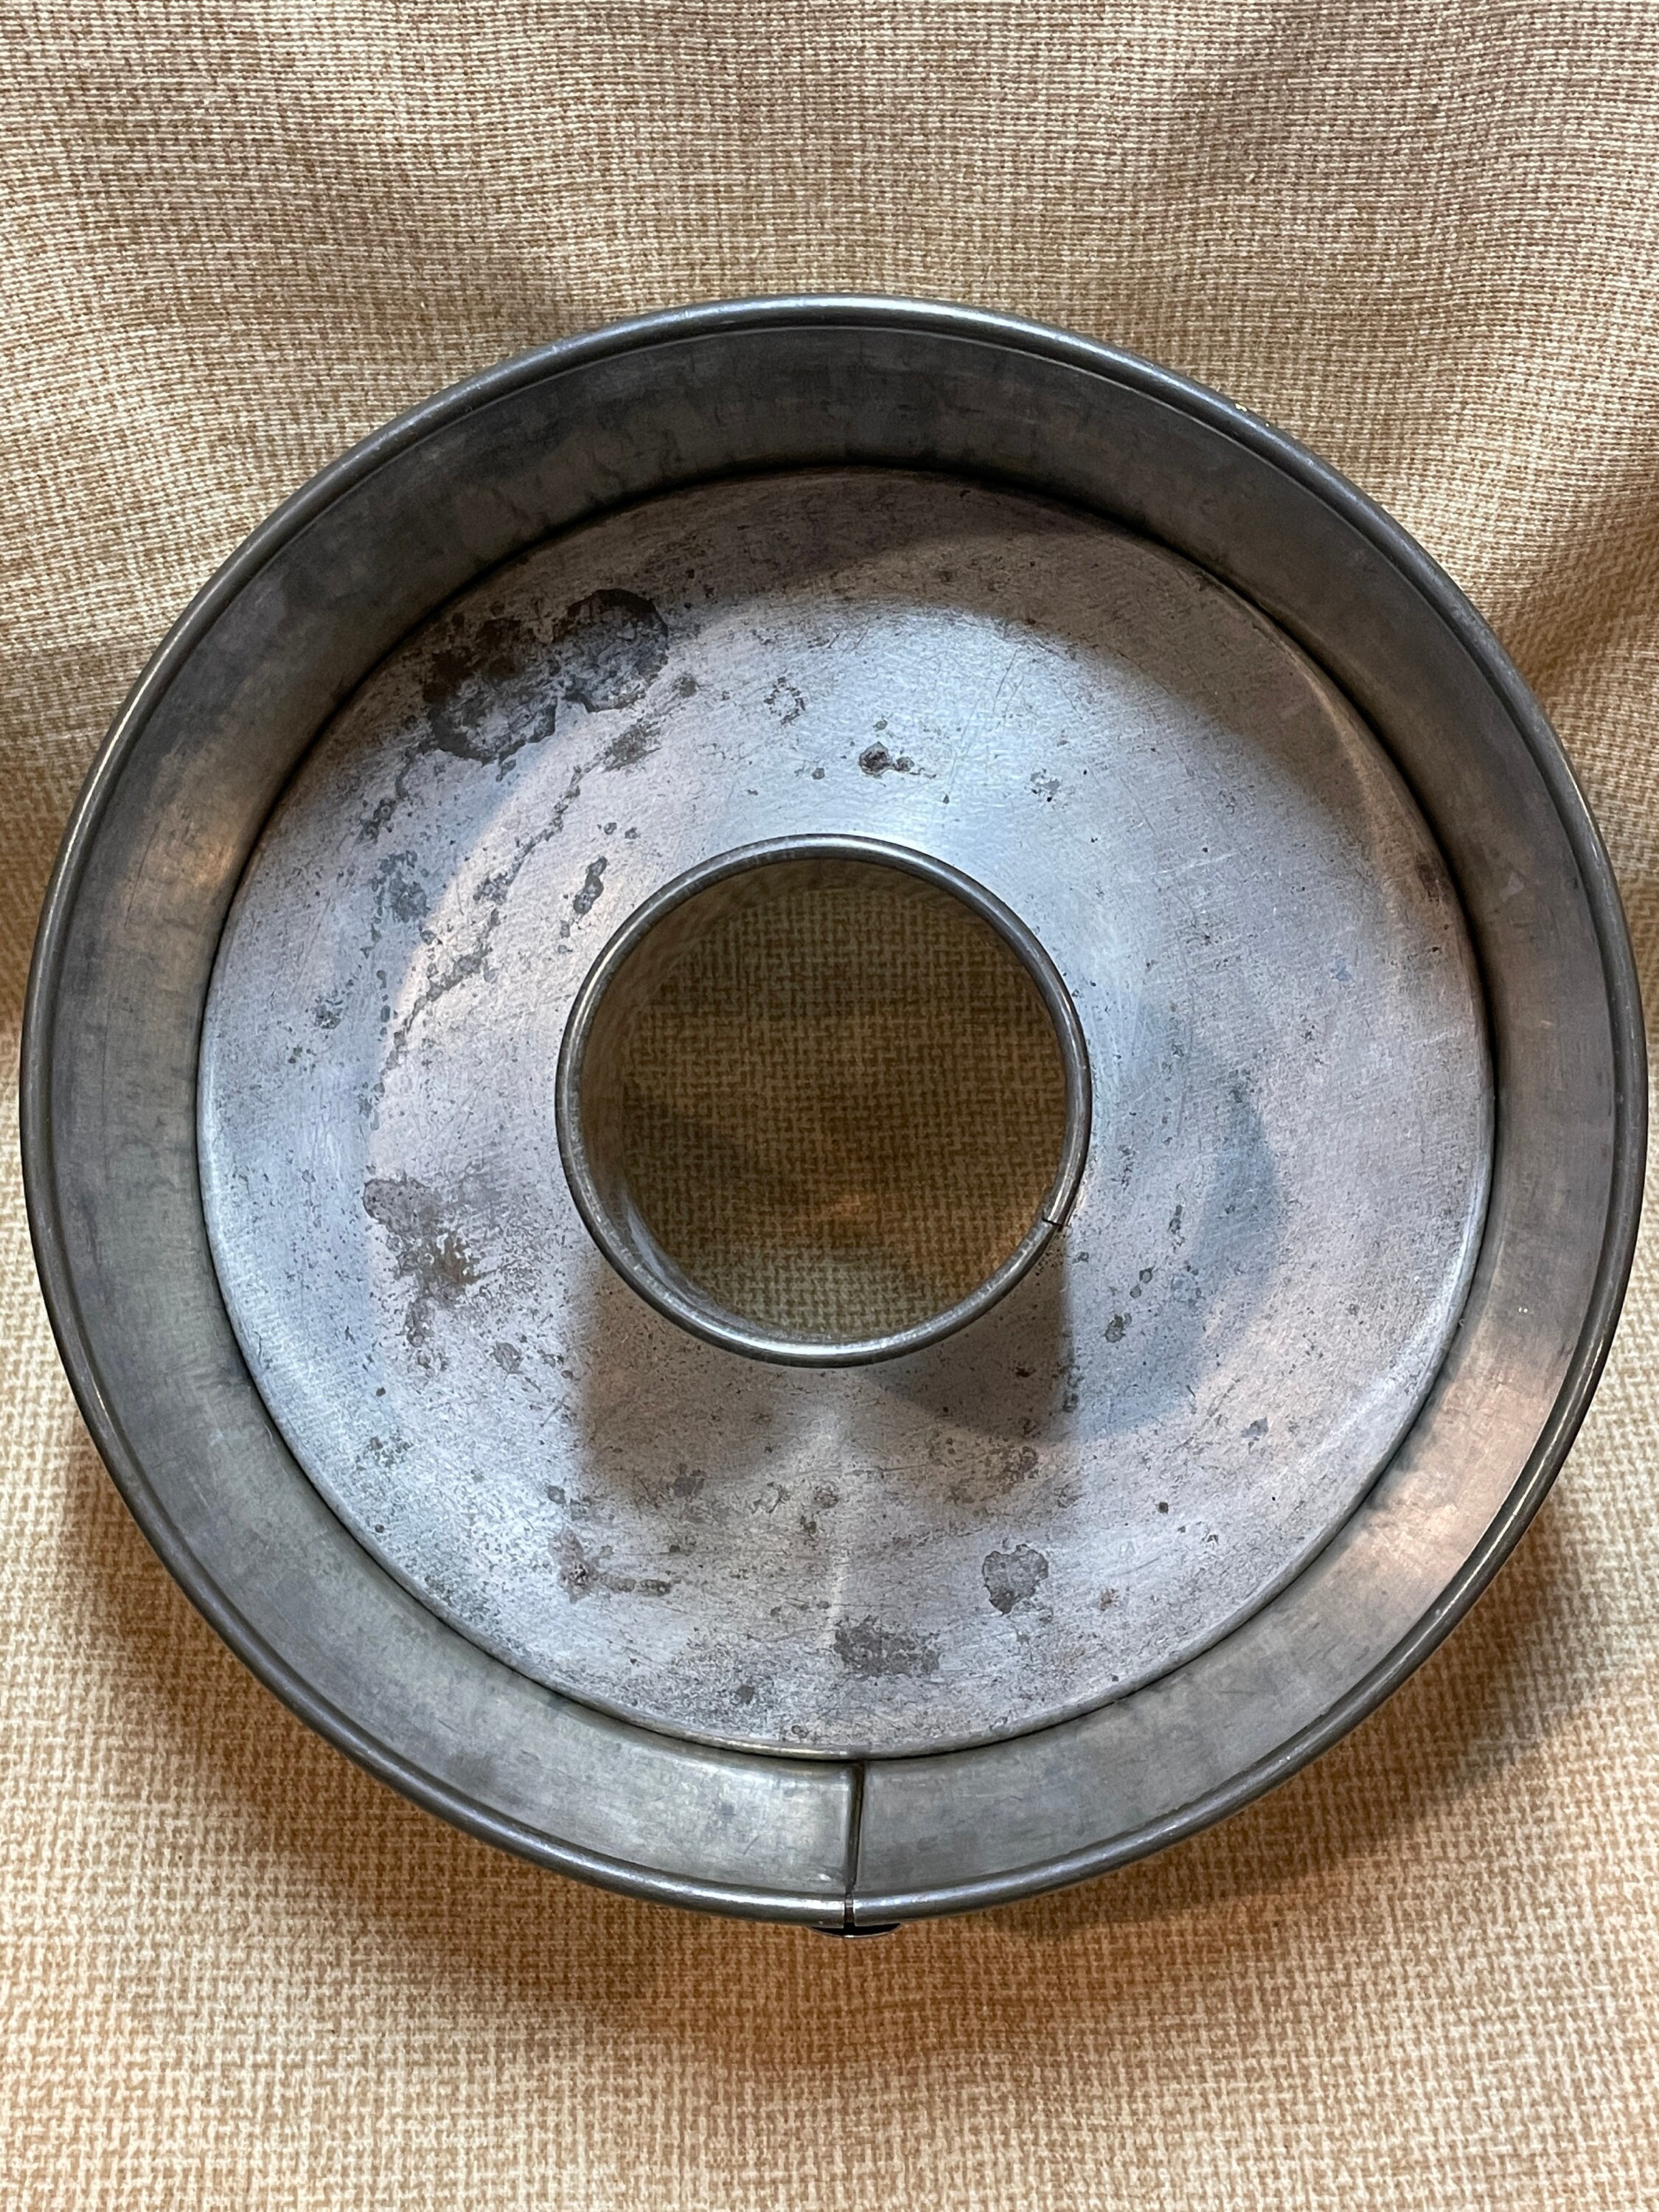  Zenker Tin Plated Springform Pan, 10-Inch Diameter, Silver:  Home & Kitchen